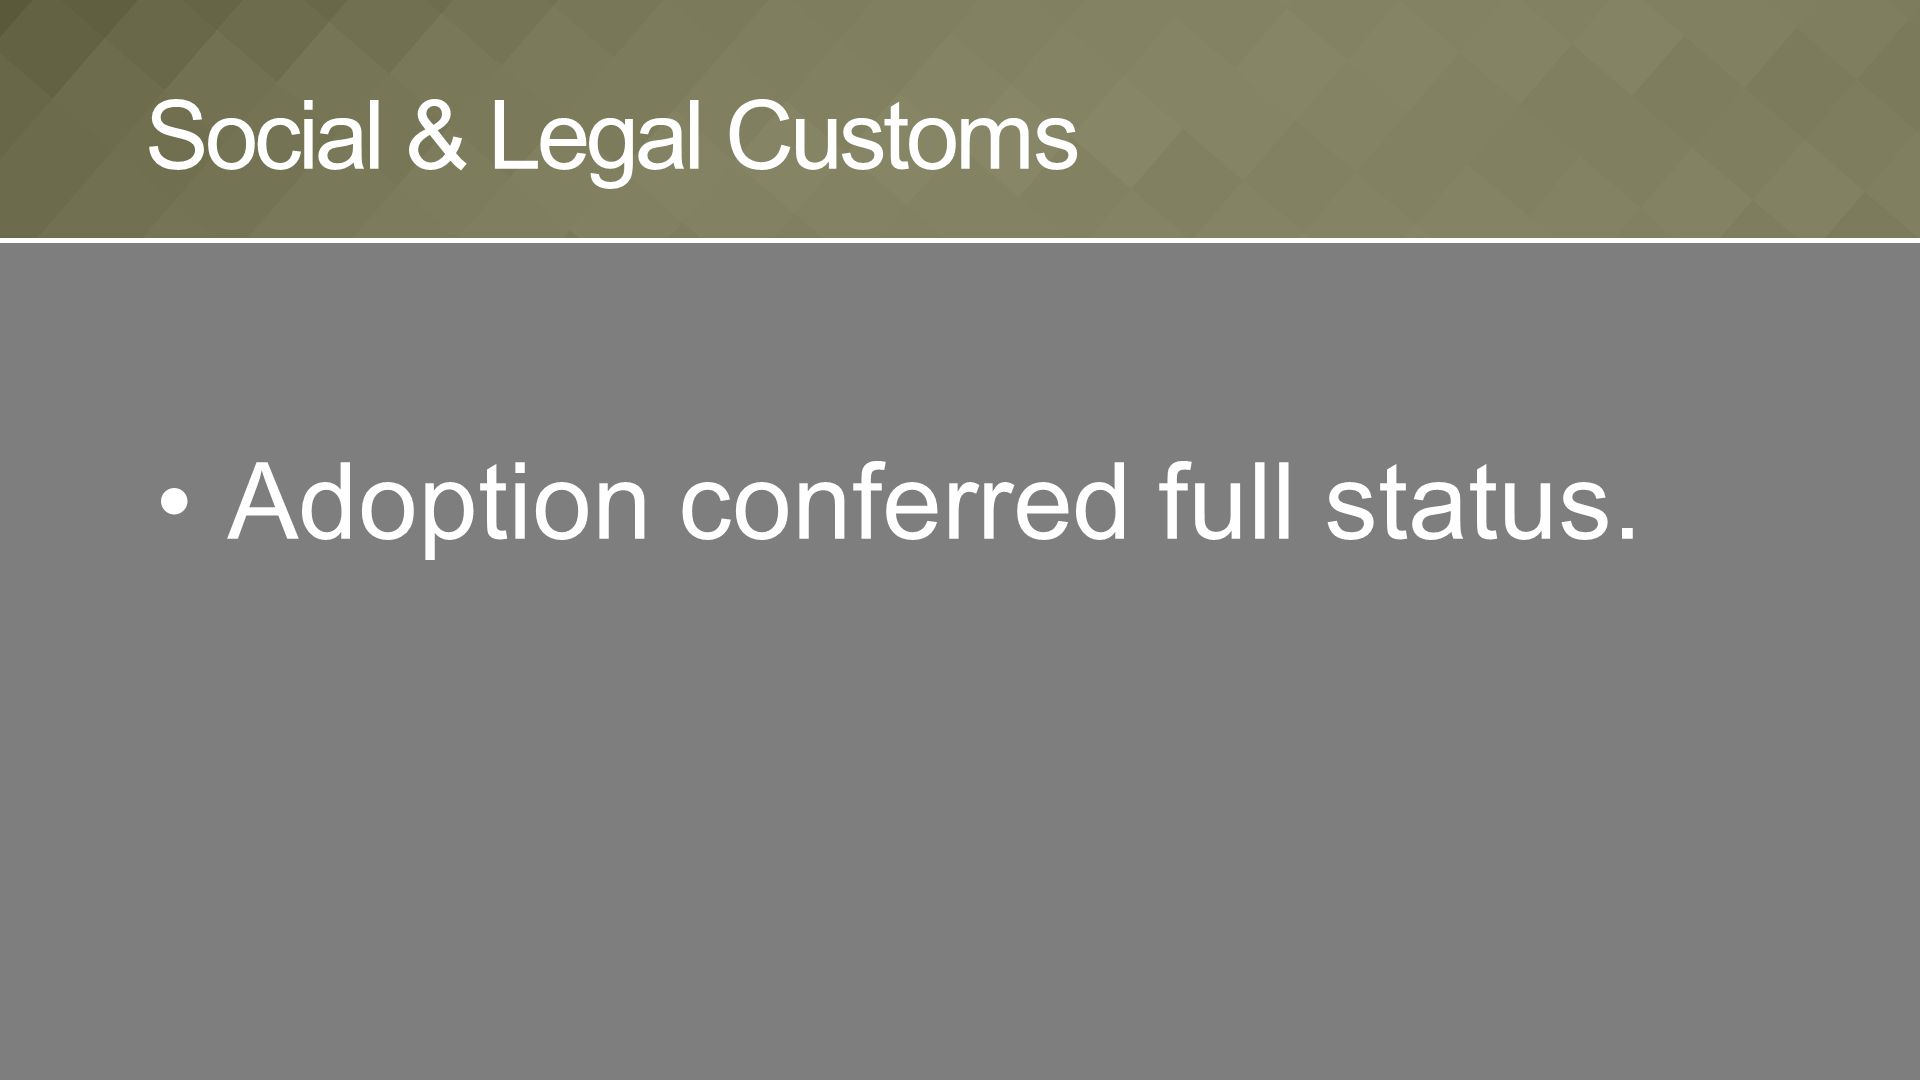 Adoption conferred full status. Social & Legal Customs